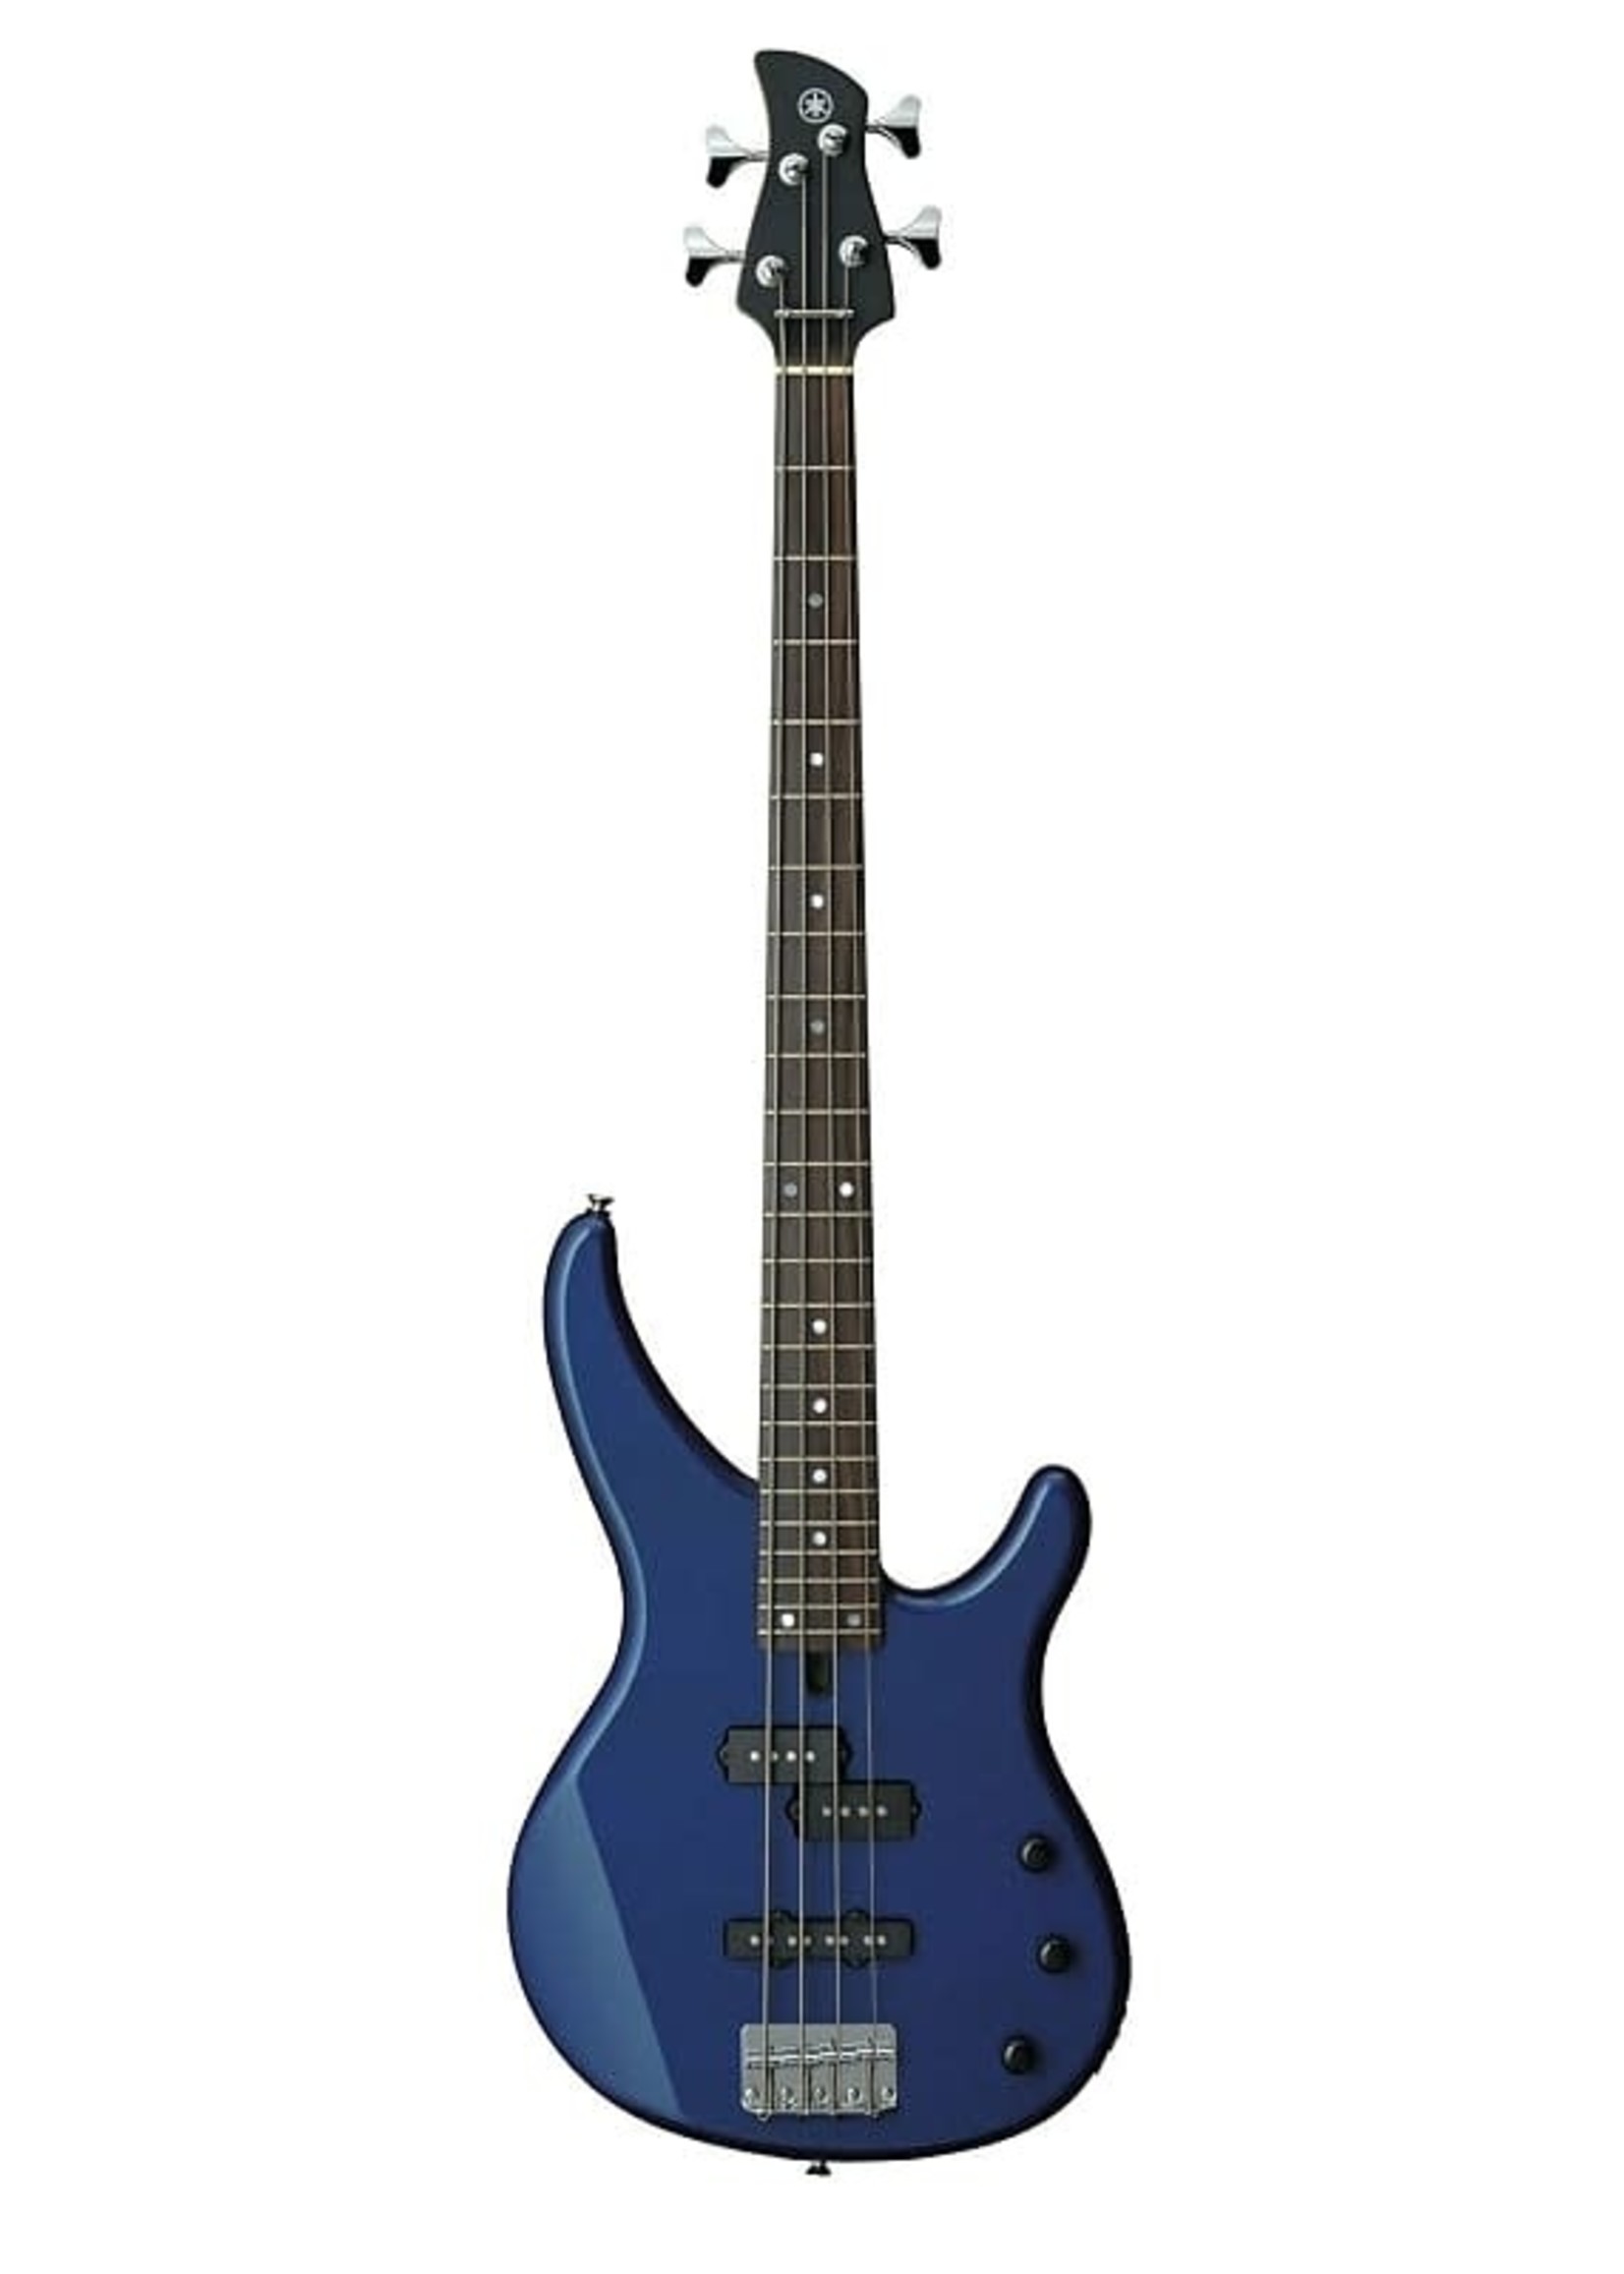 Yamaha Yamaha TRBX174 DBM 4-String Electric Bass Guitar, Blue Metallic